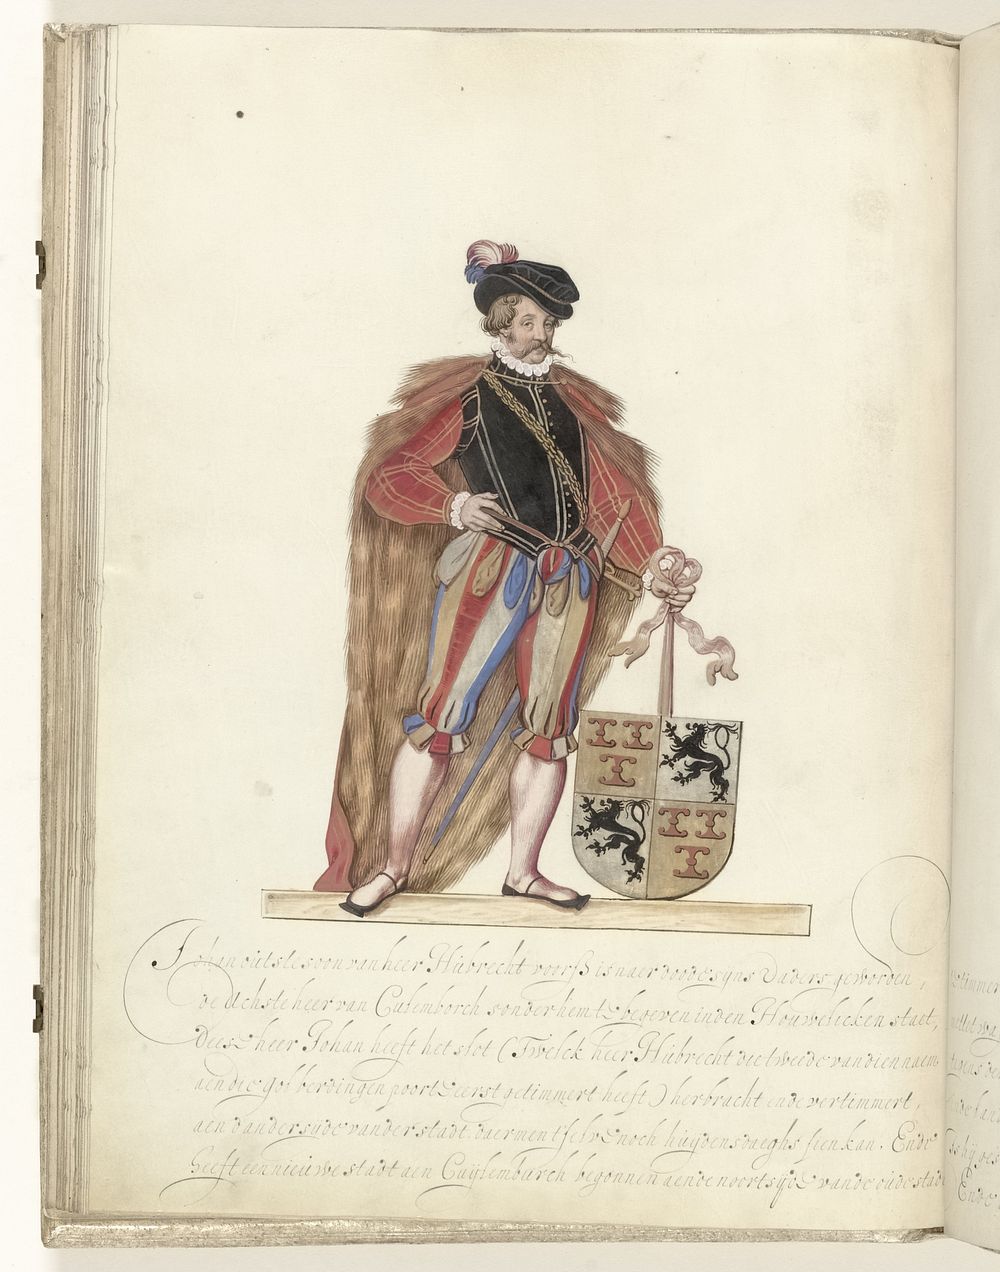 Johan II, heer van Culemborg (c. 1600 - c. 1625) by Nicolaes de Kemp and anonymous